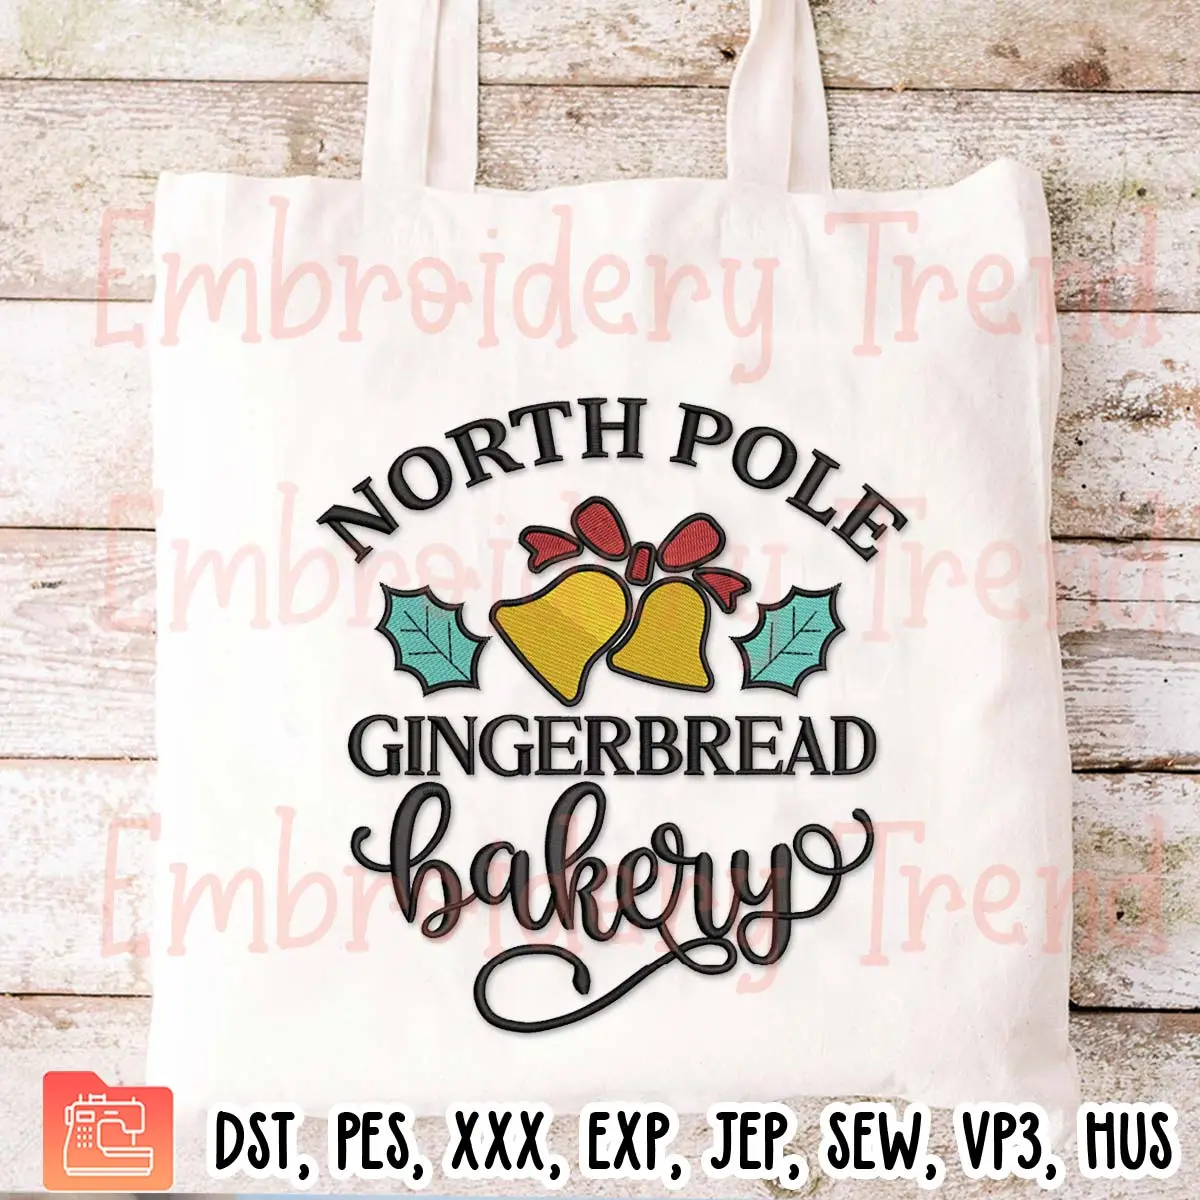 North Pole Gingerbread Xmas Embroidery Design, Christmas Gingerbread Bakery Embroidery Digitizing File